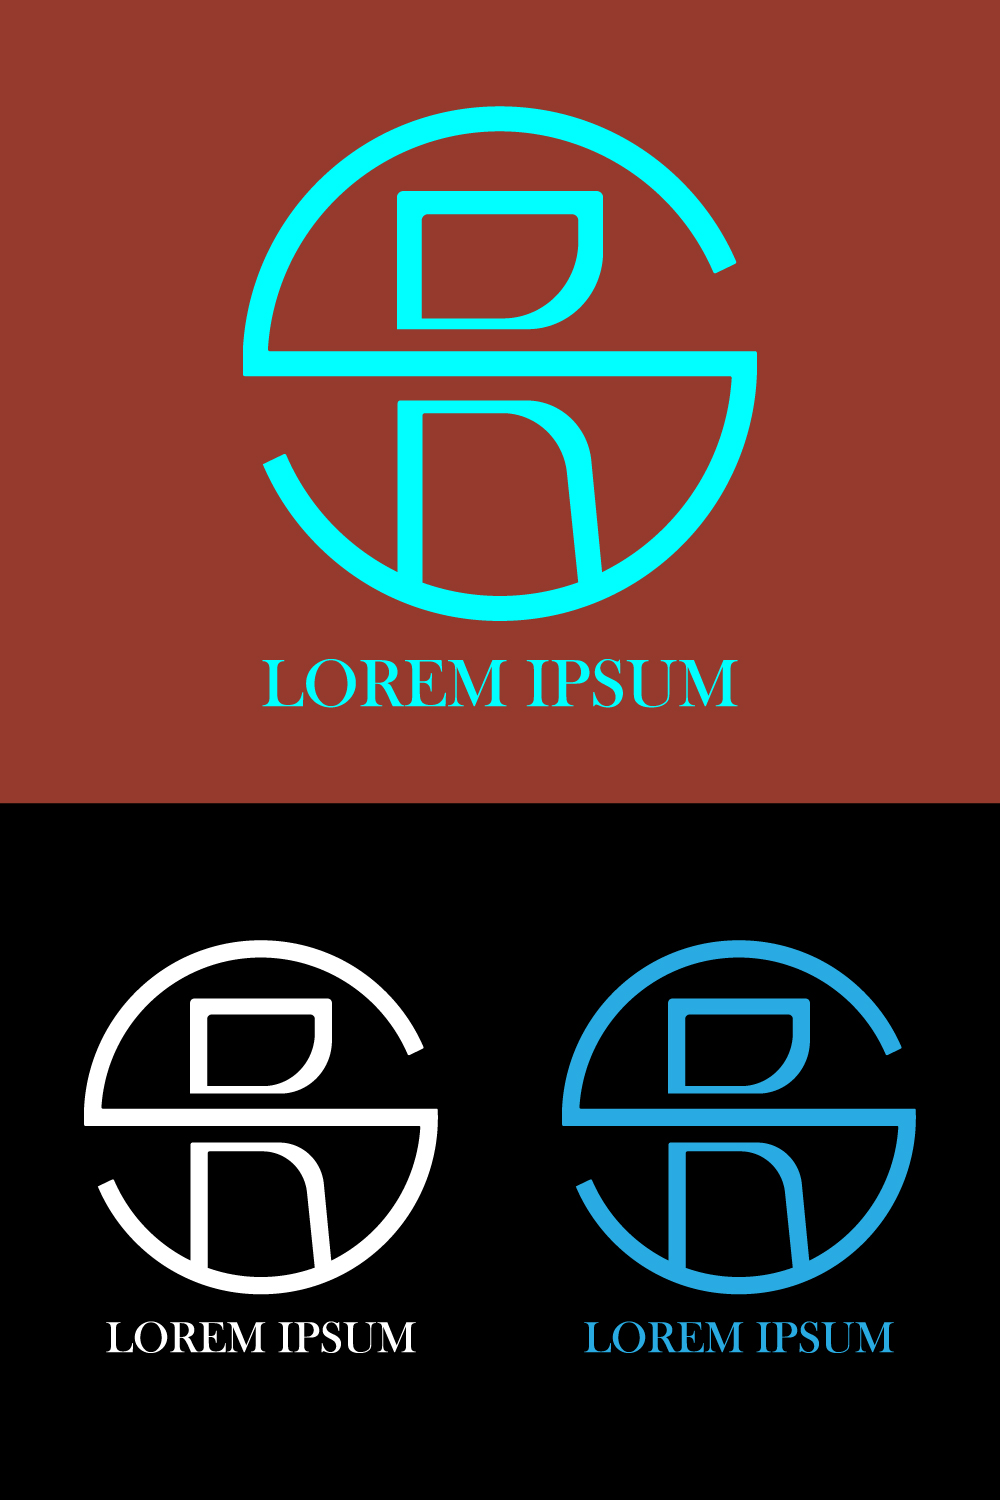 Initials SR letters logo design vector images RS logo design sky , blue color best brand company identity SR Premium vector illustration pinterest preview image.